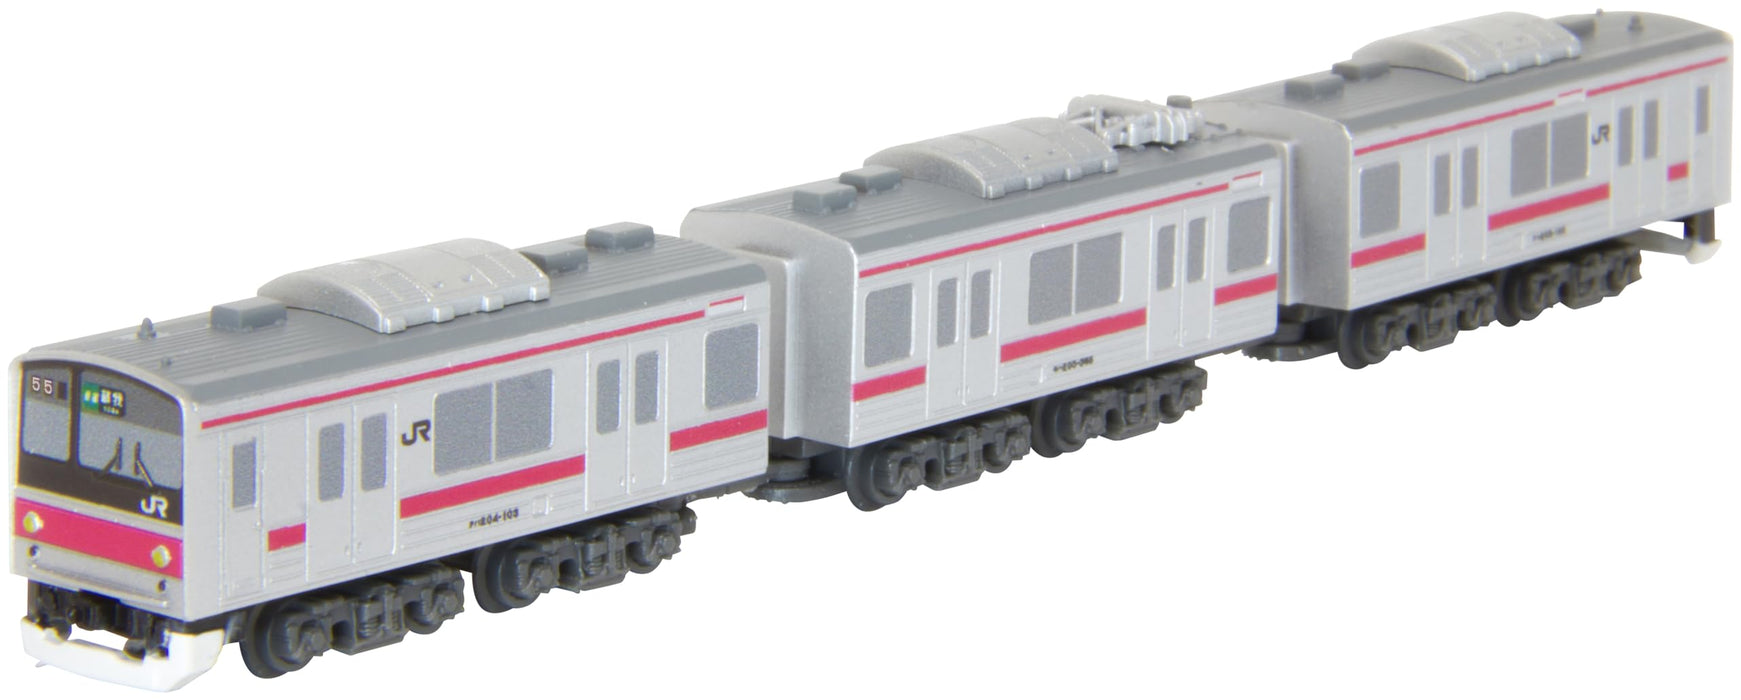 Rokuhan Z Gauge Shorty 205 Series Railway Model Train - Keiyo Line Edition